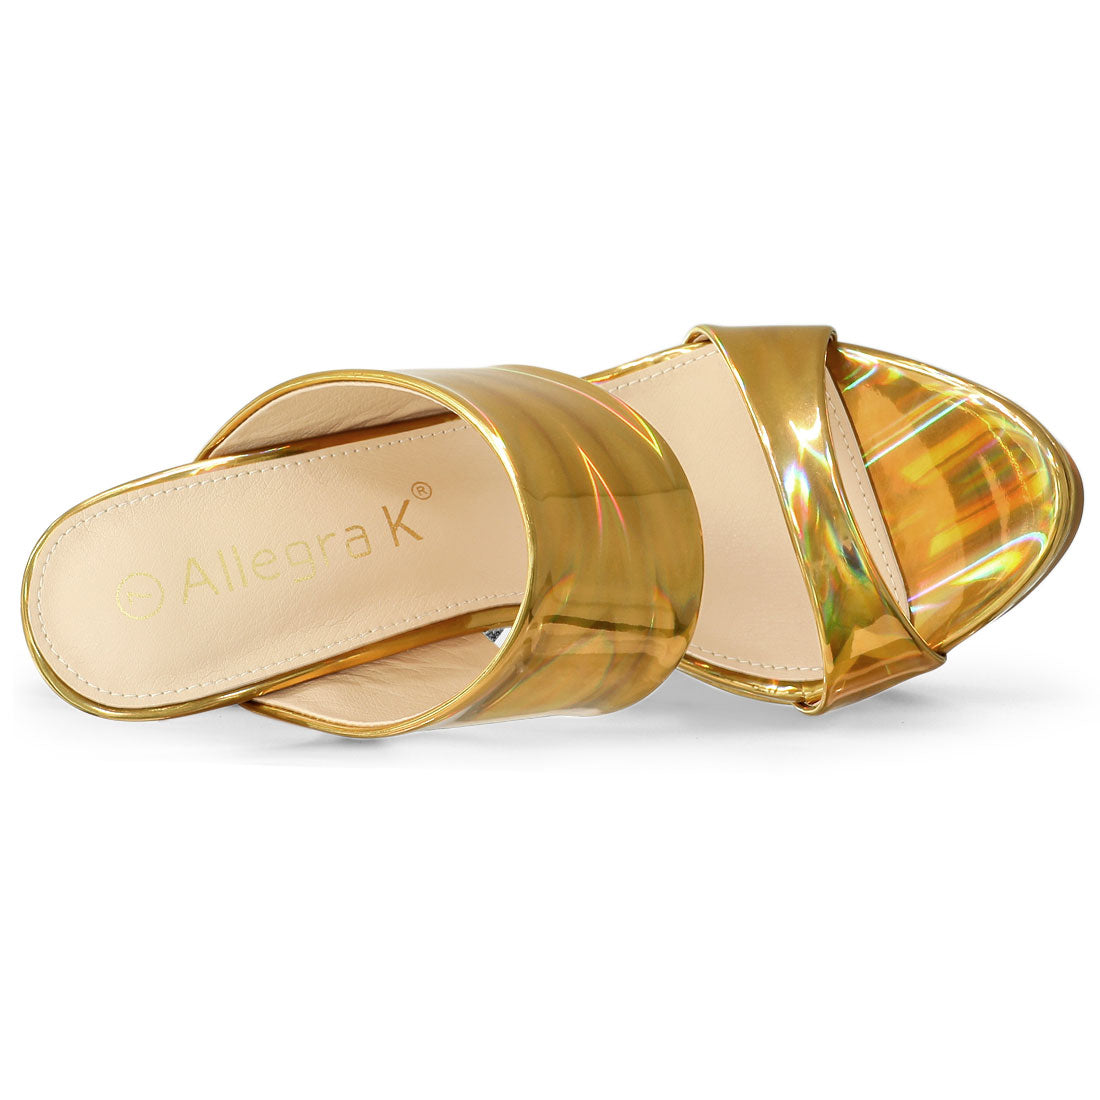 Allegra K Shiny Colorful Platform Stiletto Heel Open Toe Sandals